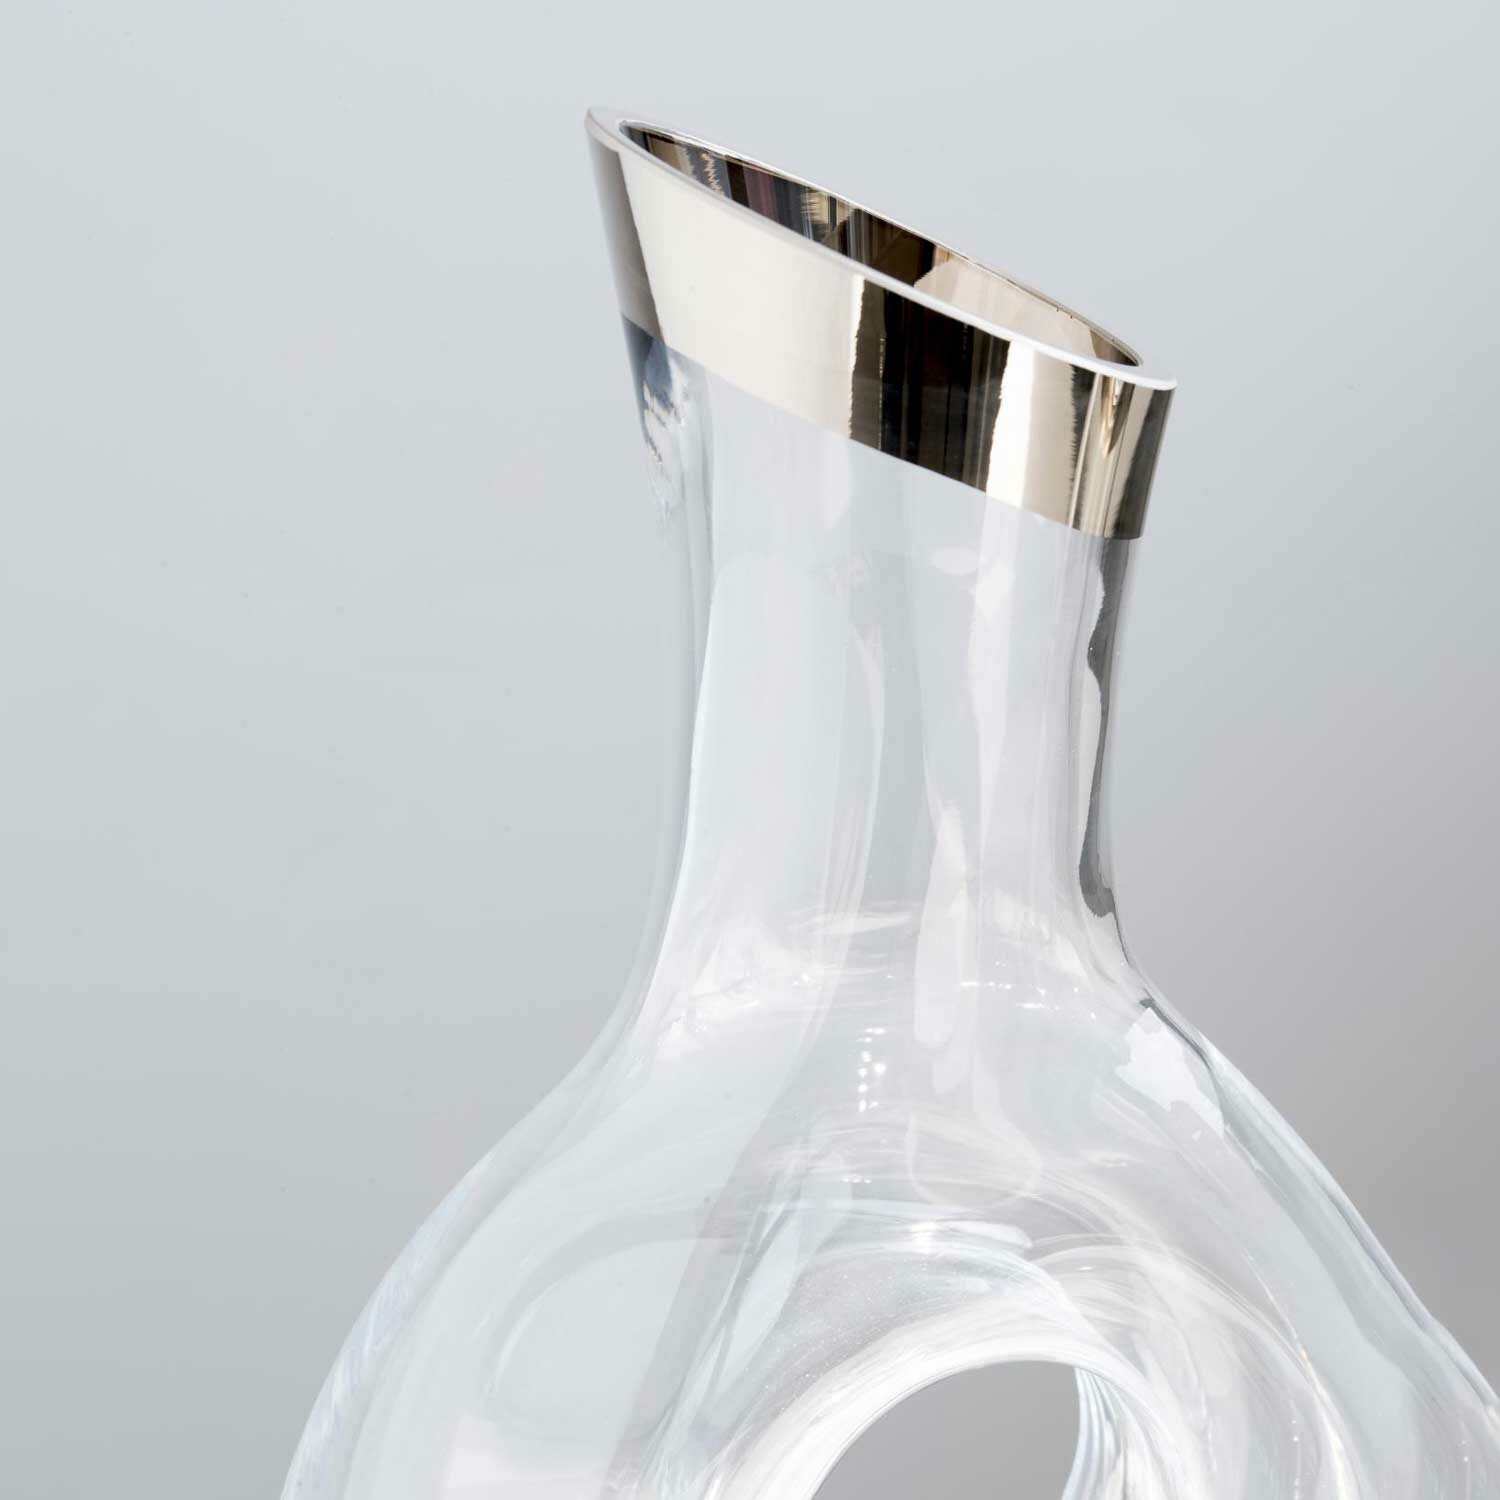 GORDON decanter platinum with pass-through